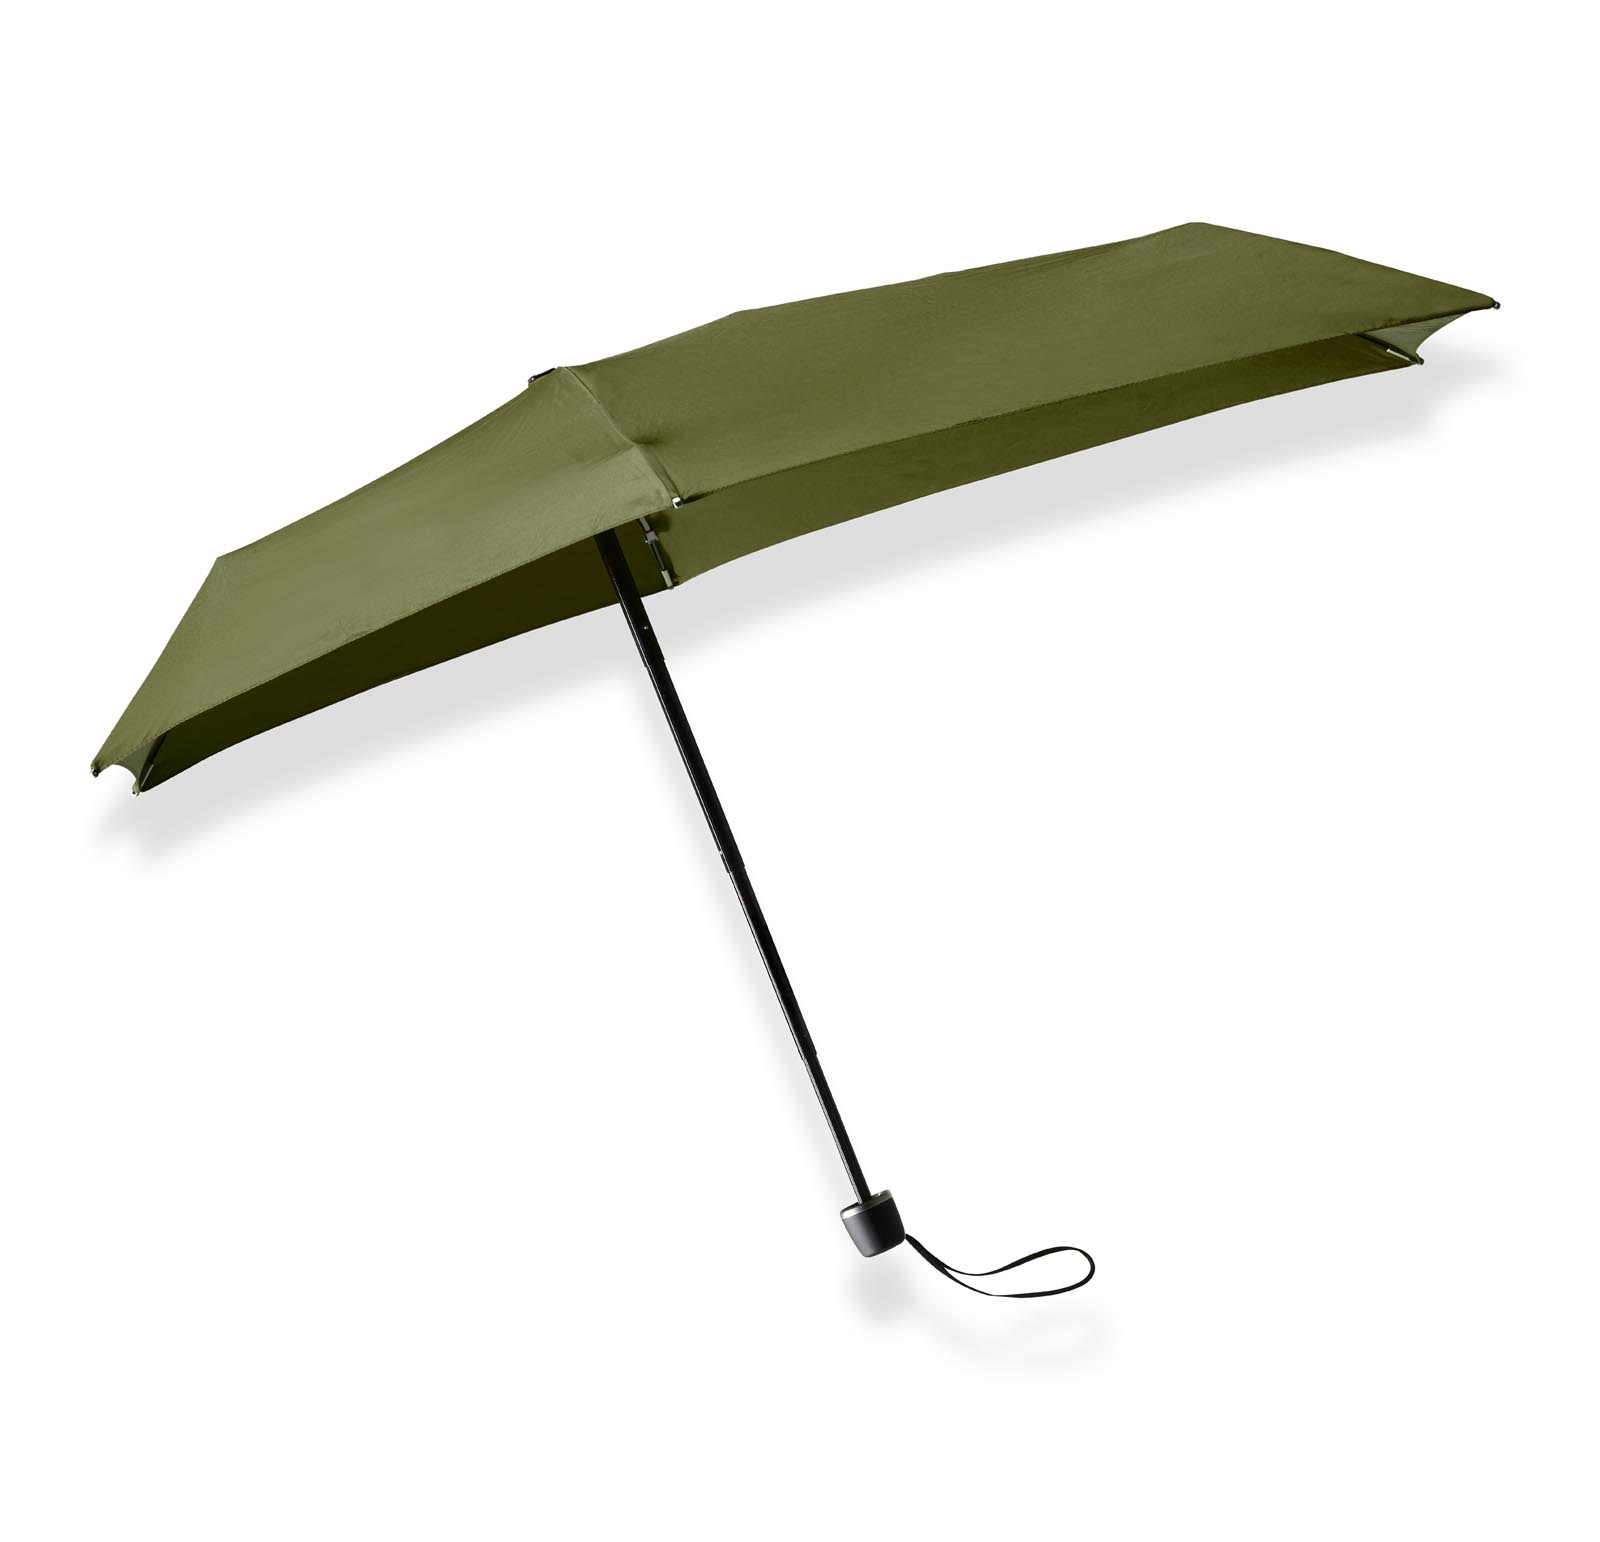 Overleg Besmettelijk bom Groene opvouwbare paraplu micro kopen? senz° micro cedar green